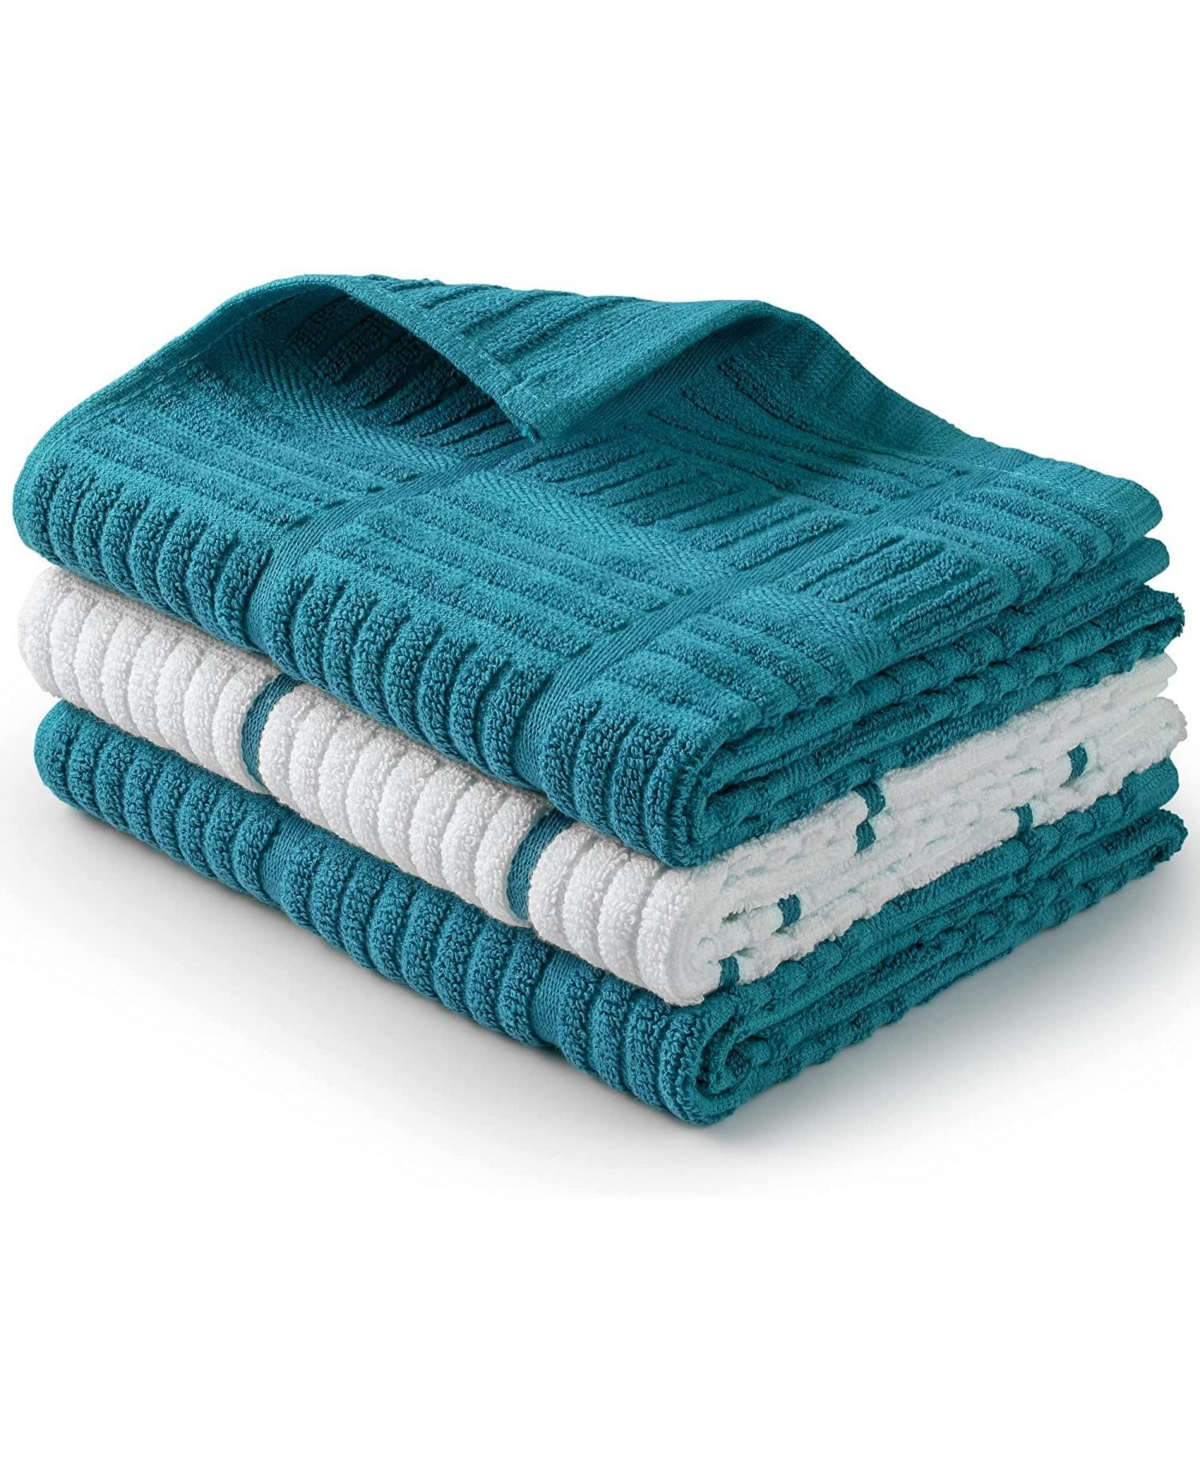 3 Pack Reusable Absorbent Kitchen Towels Cotton - Blue